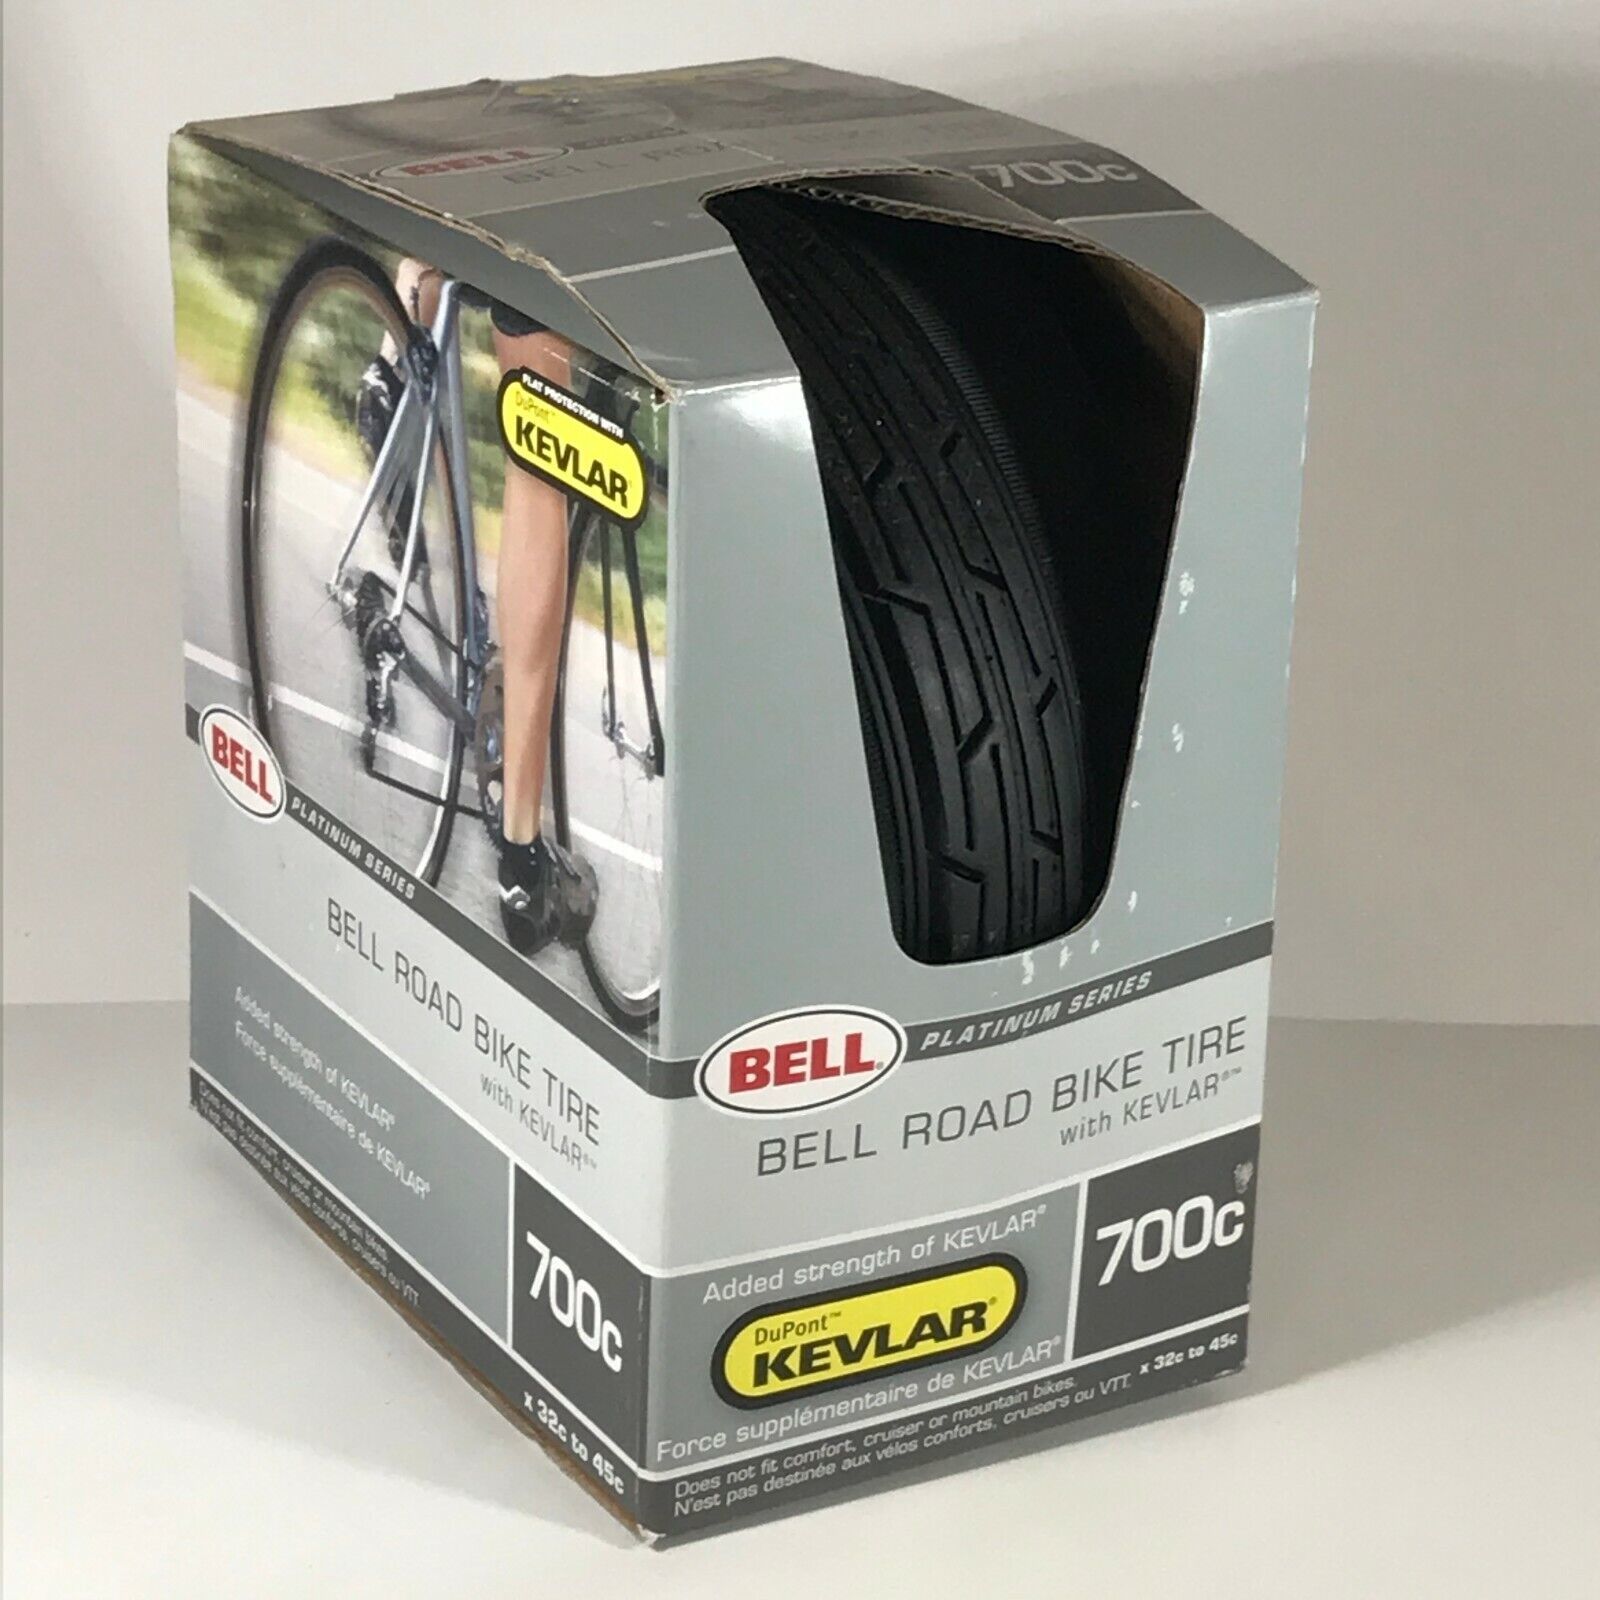 Bell Road Bike Tire w/ Dupont Kevlar Platinum Series 700c - x 32c to 45c  - $12.19